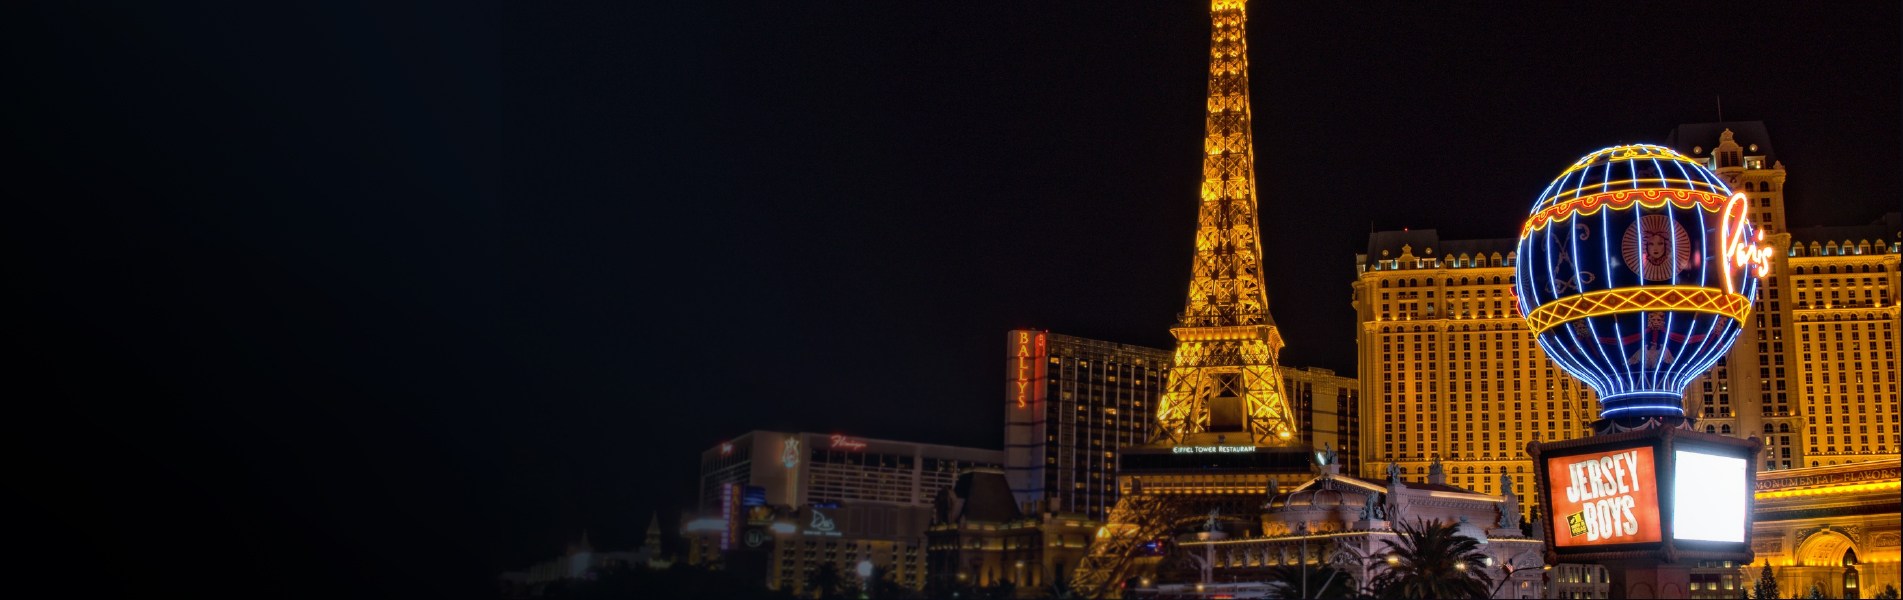 Online Casino Las Vegas Erfahrungsbericht